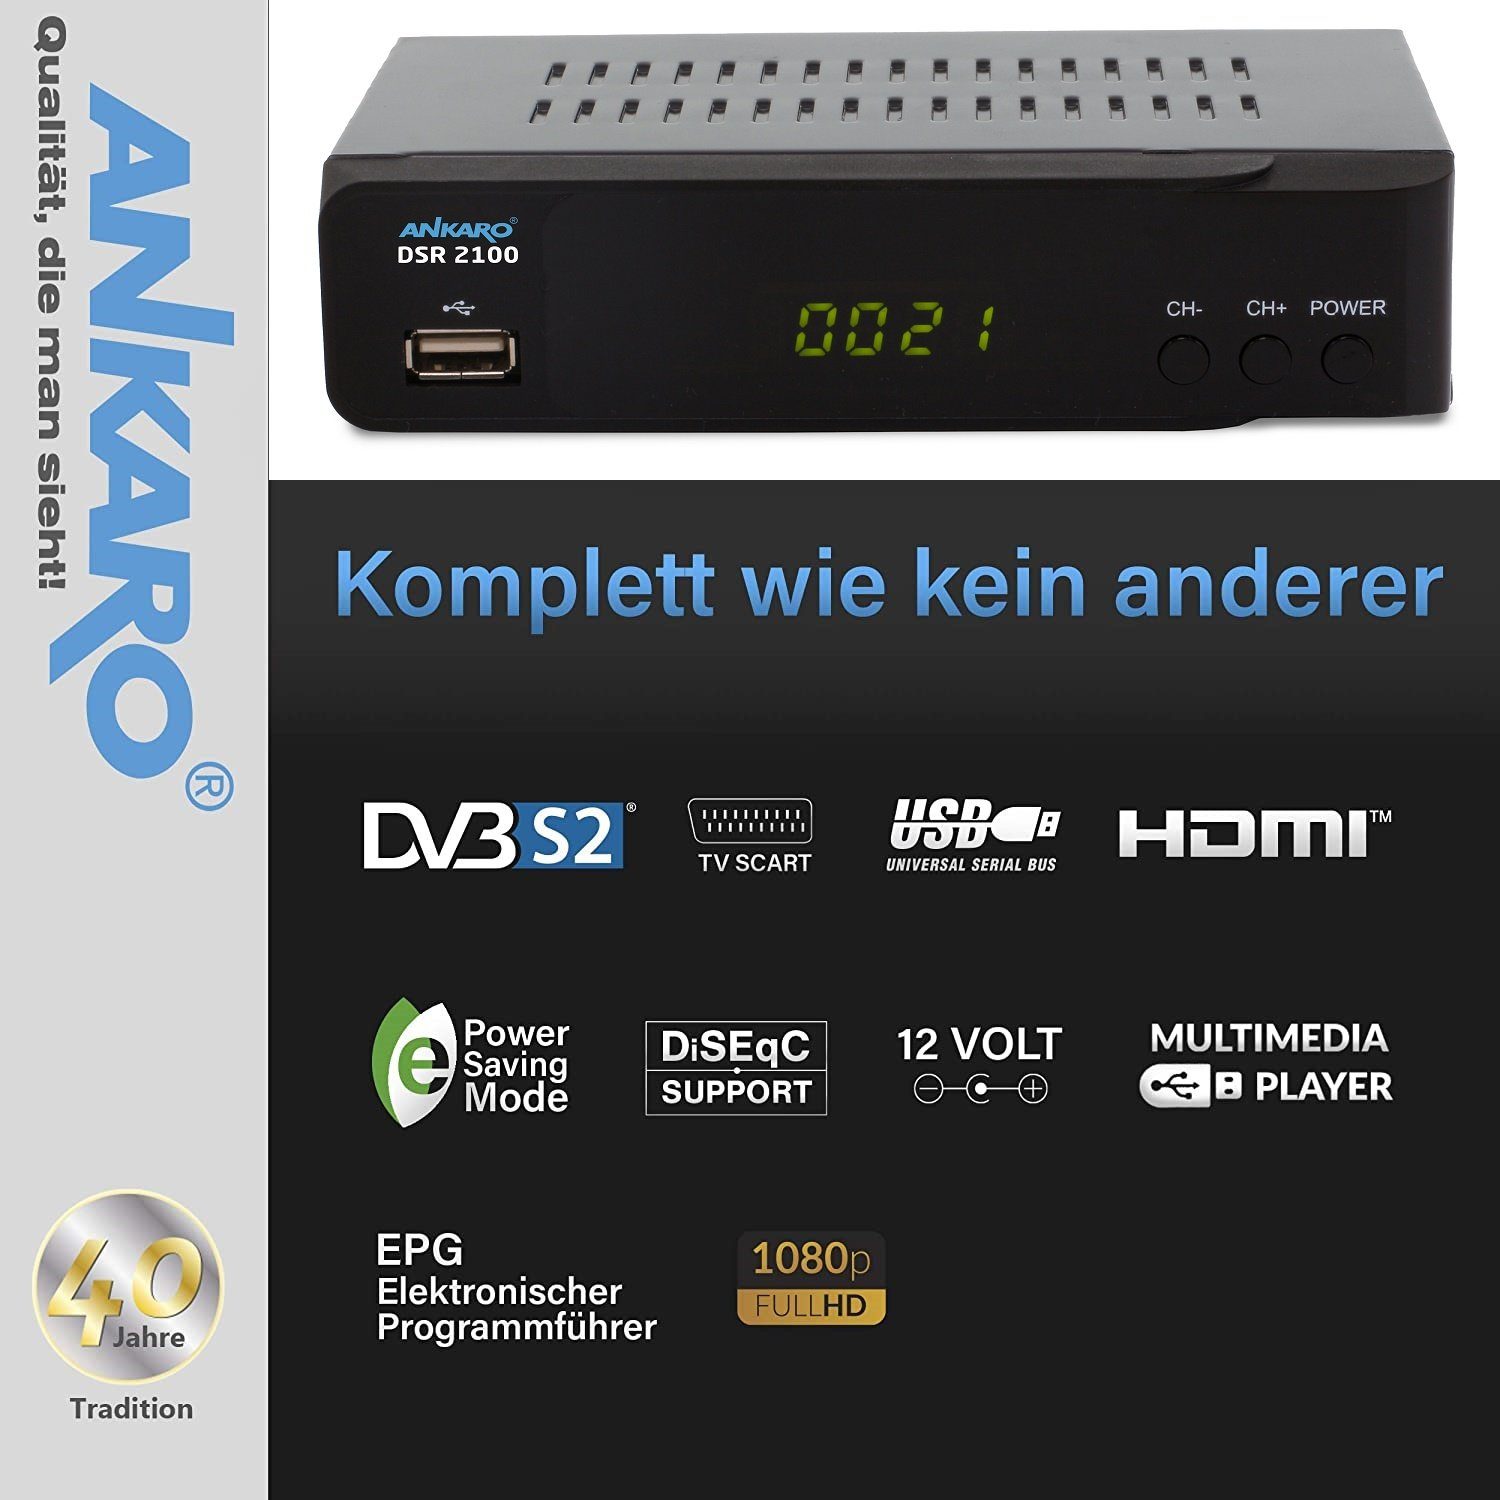 Ankaro Ankaro DSR HD 2100 Receiver Satelliten schwarz digitaler Satellitenreceiver Full 1080p